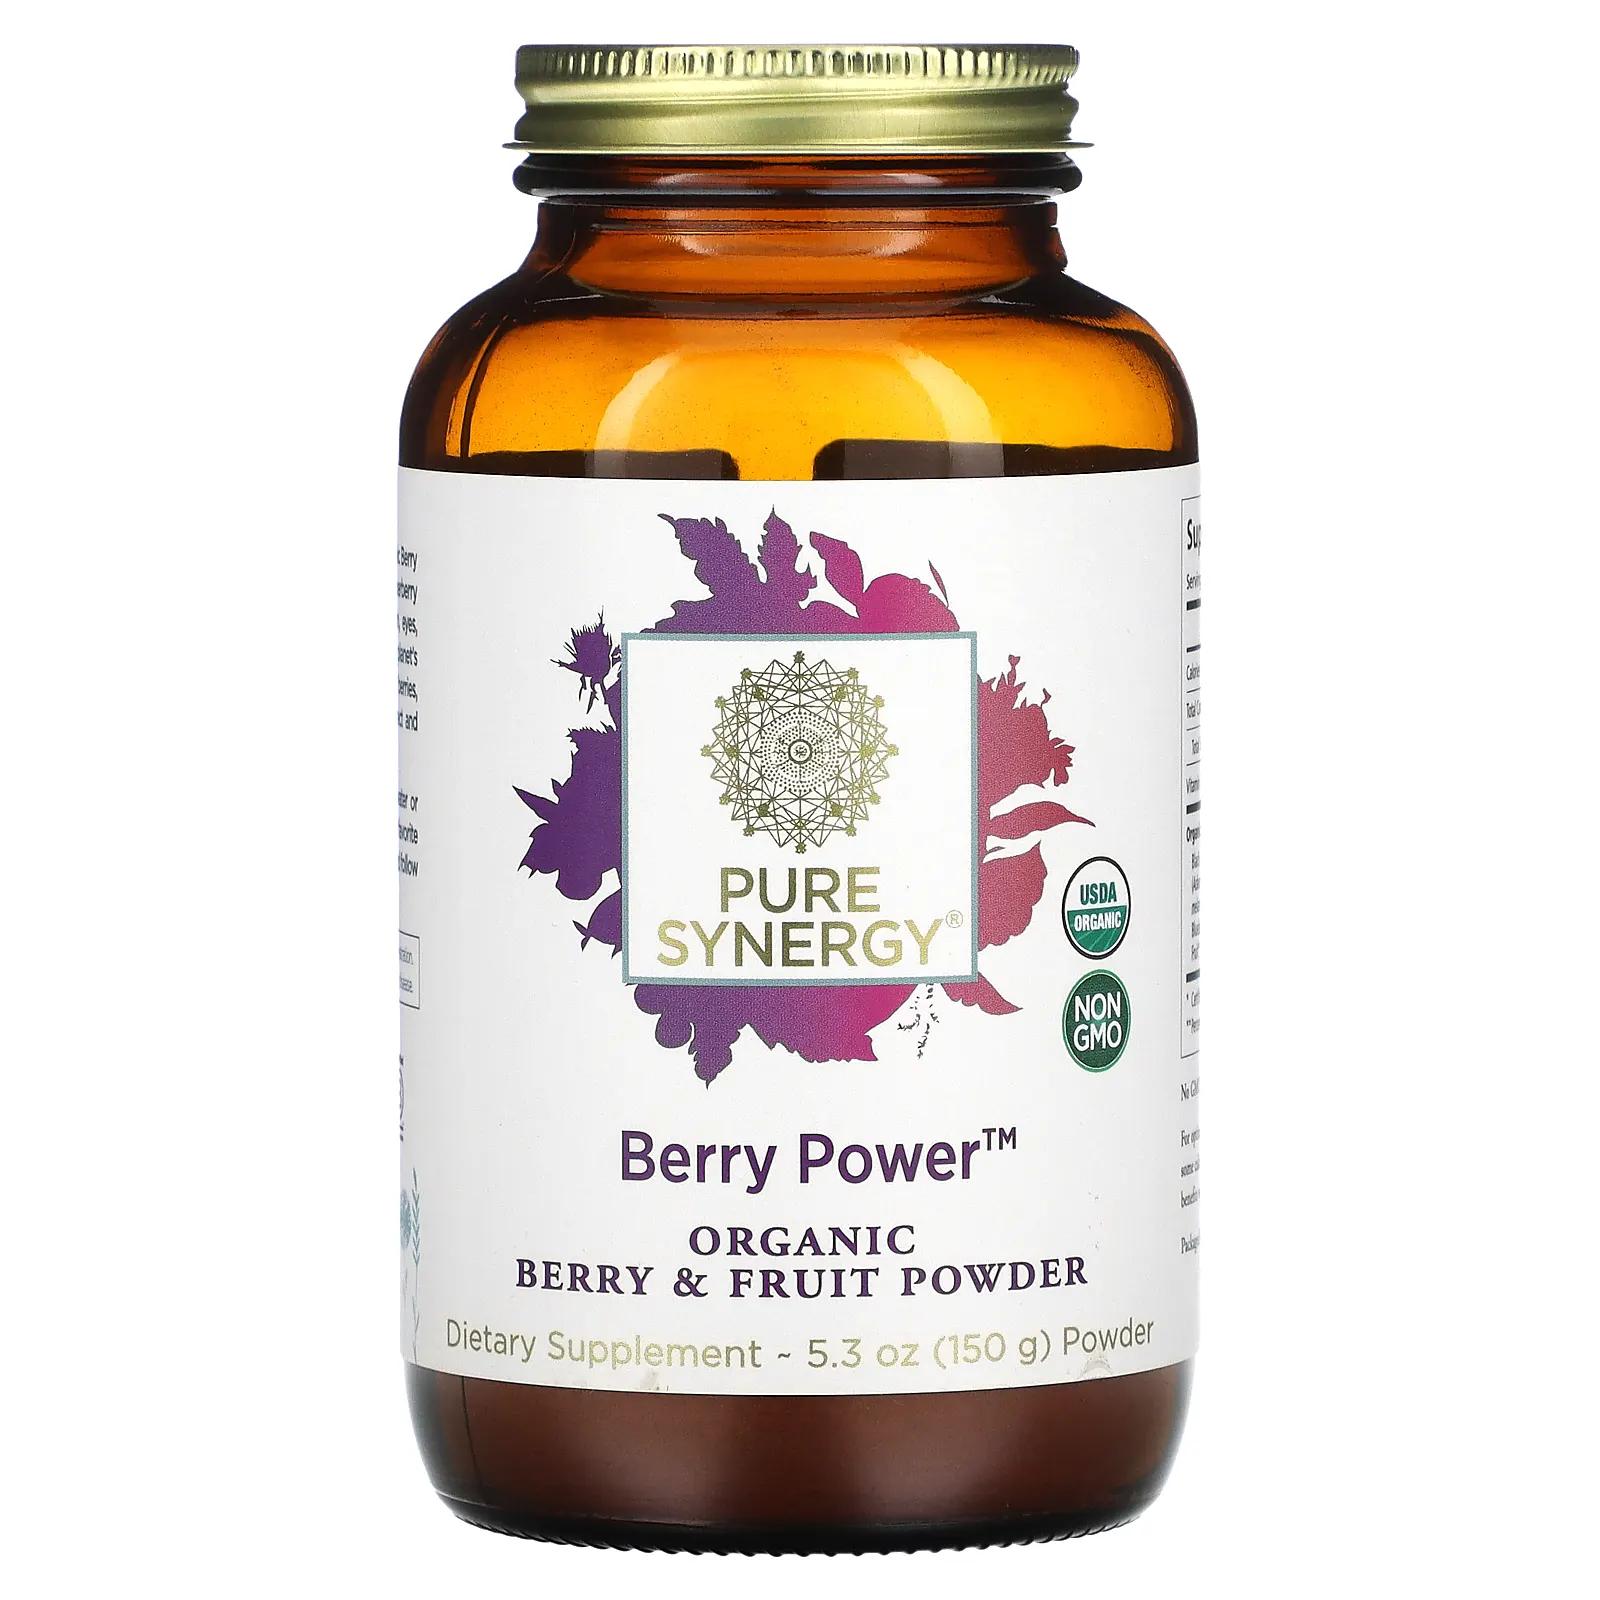 Pure Synergy Berry Power Organic Berry & Fruit Powder 5.3 oz (150 g) synergy lab dog wash puppy pure